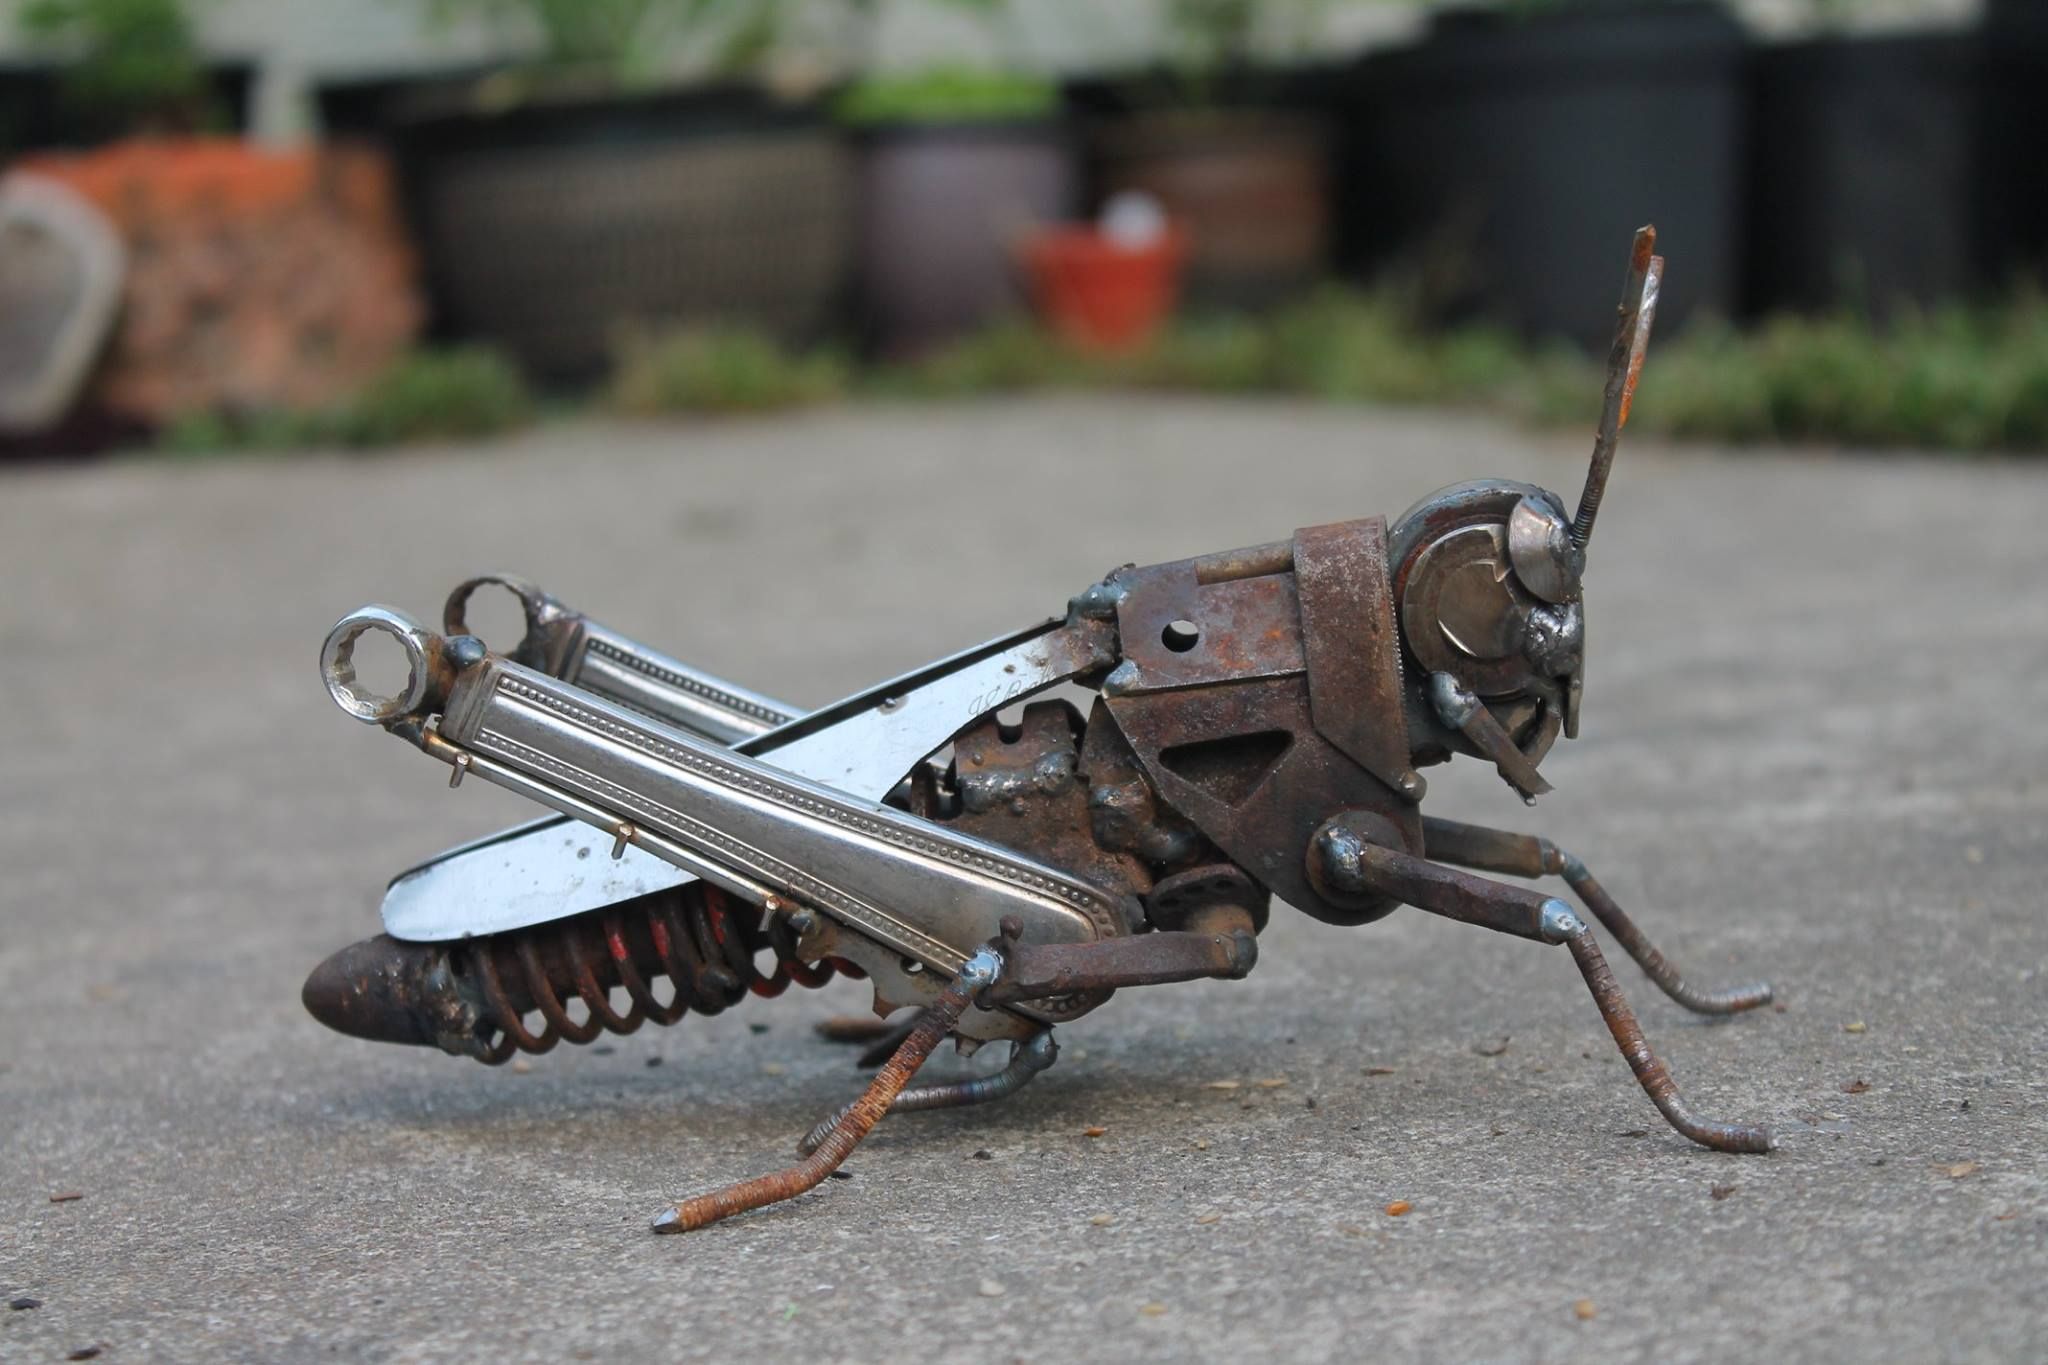 Grasshopper Scrap Metal Art 2048x1365